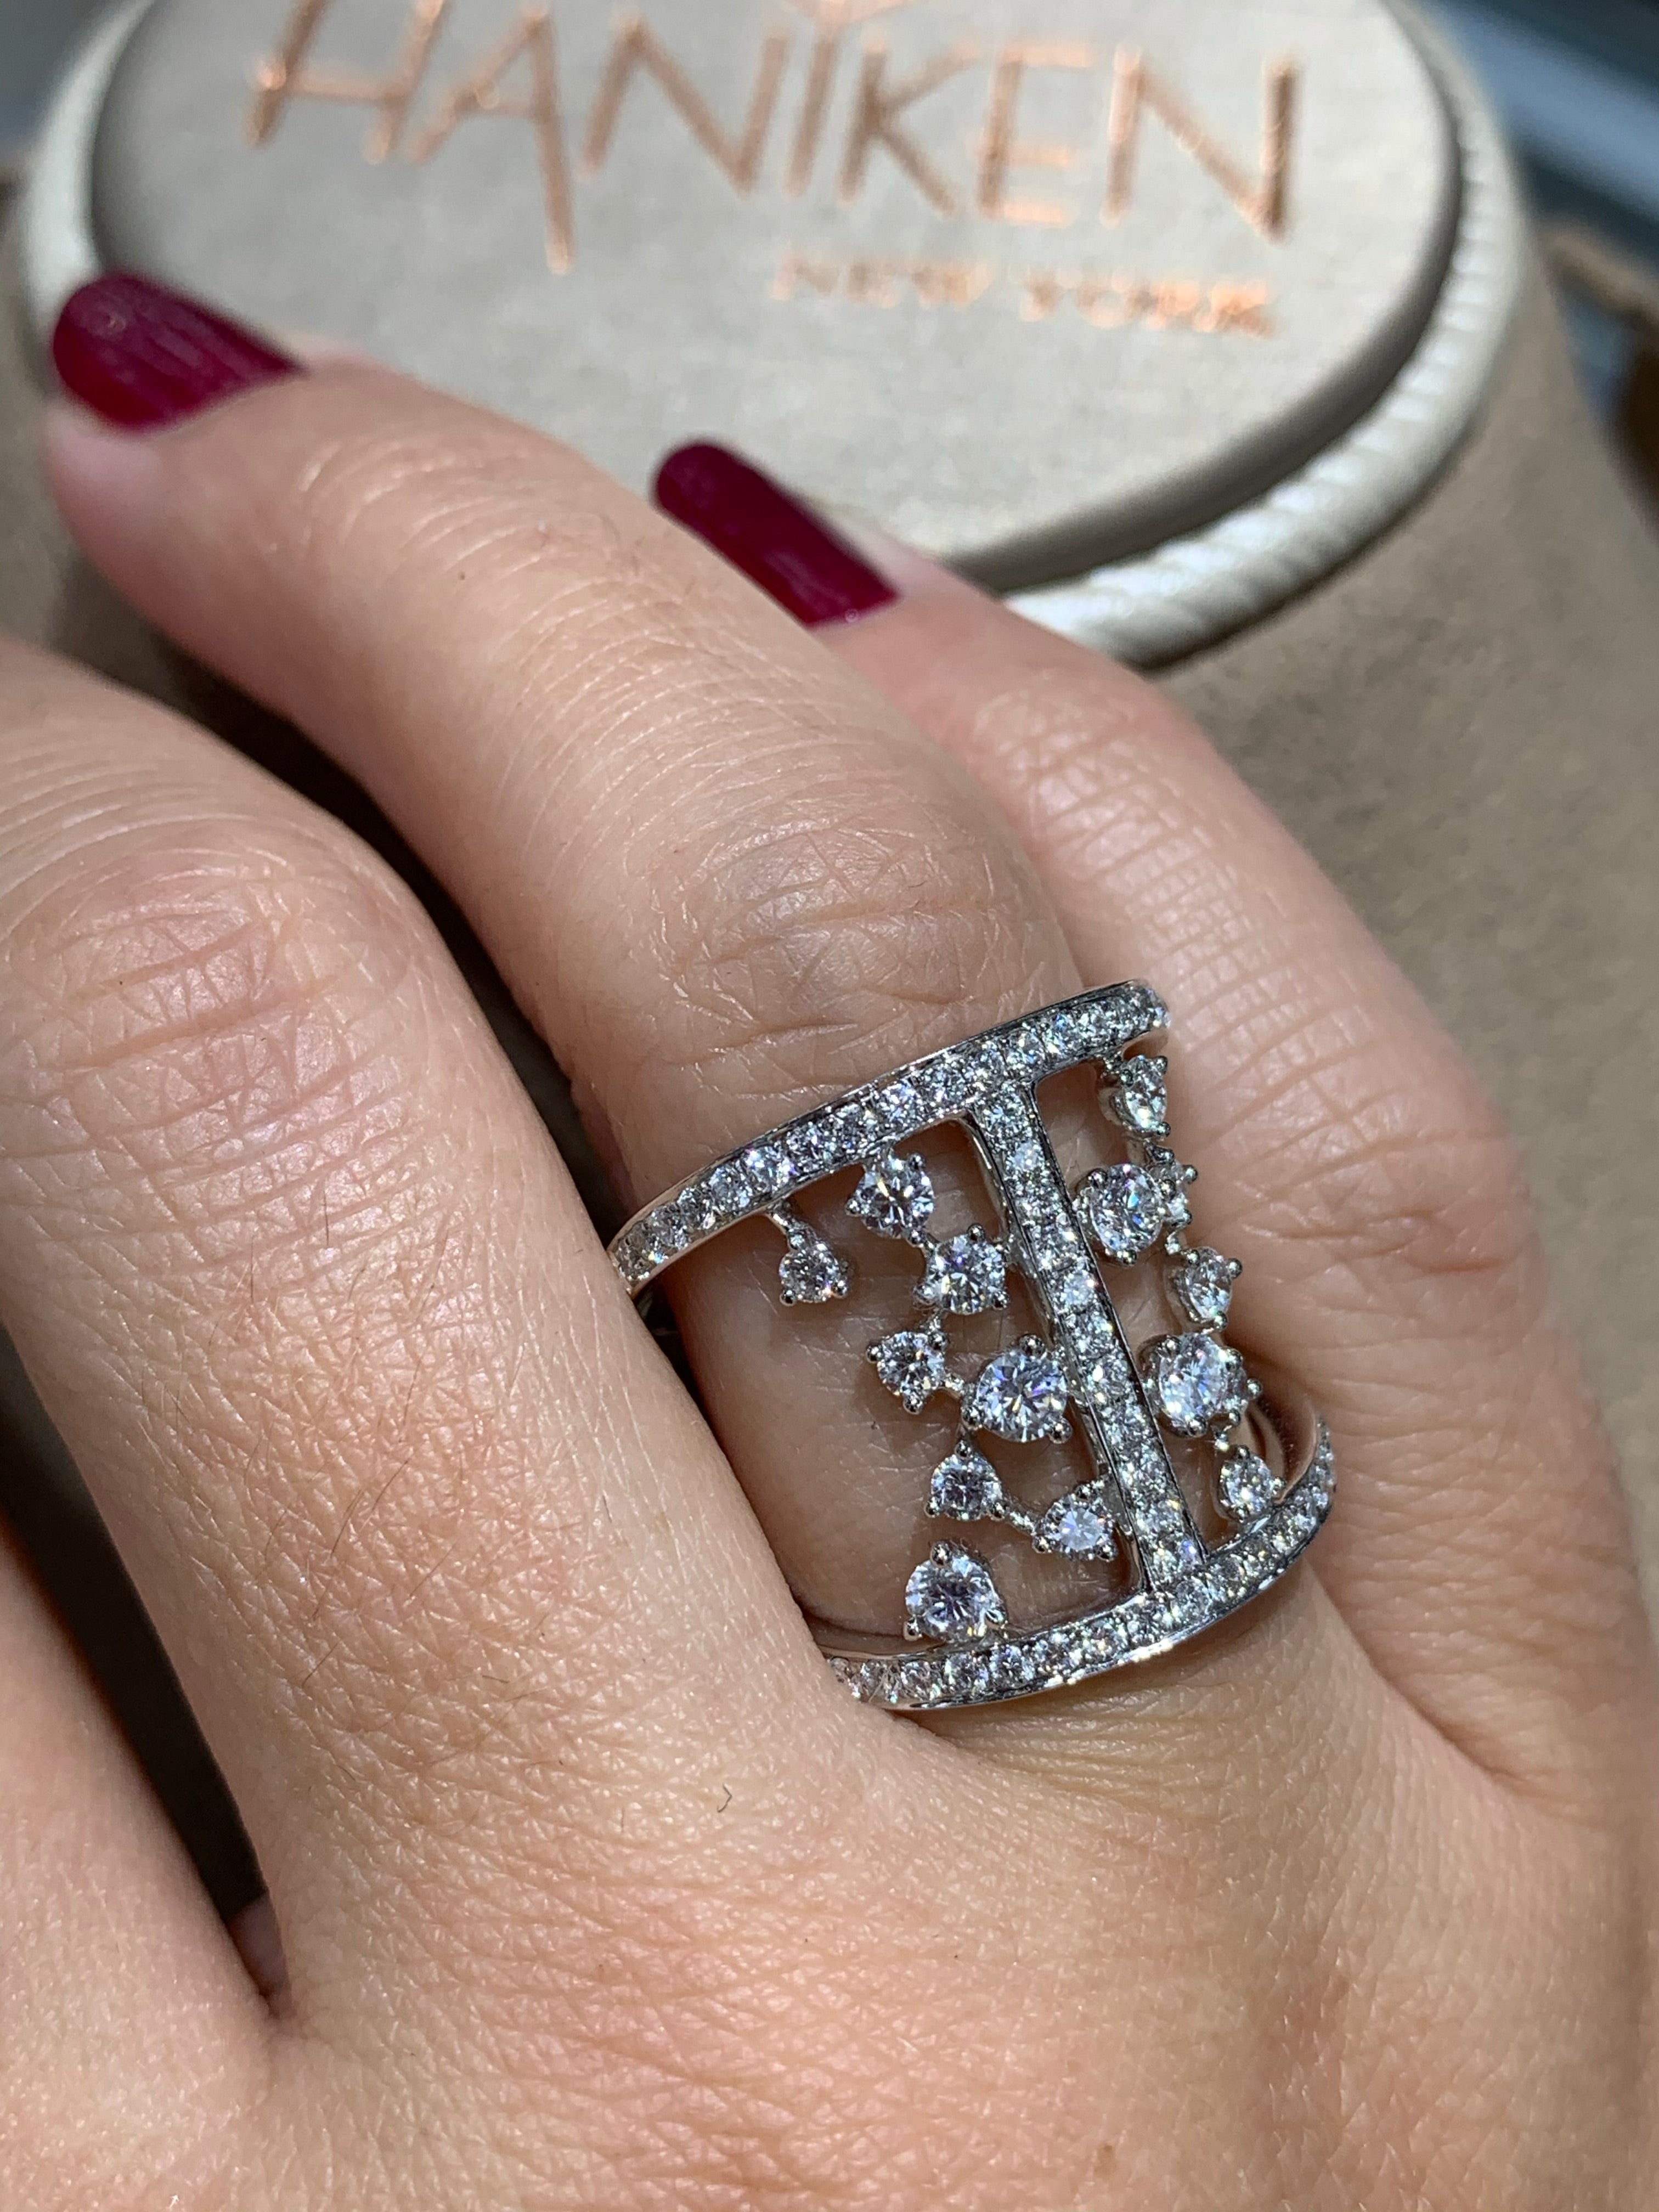 1.39ctw Diamond Cocktail Ring - HANIKEN JEWELERS NEW-YORK